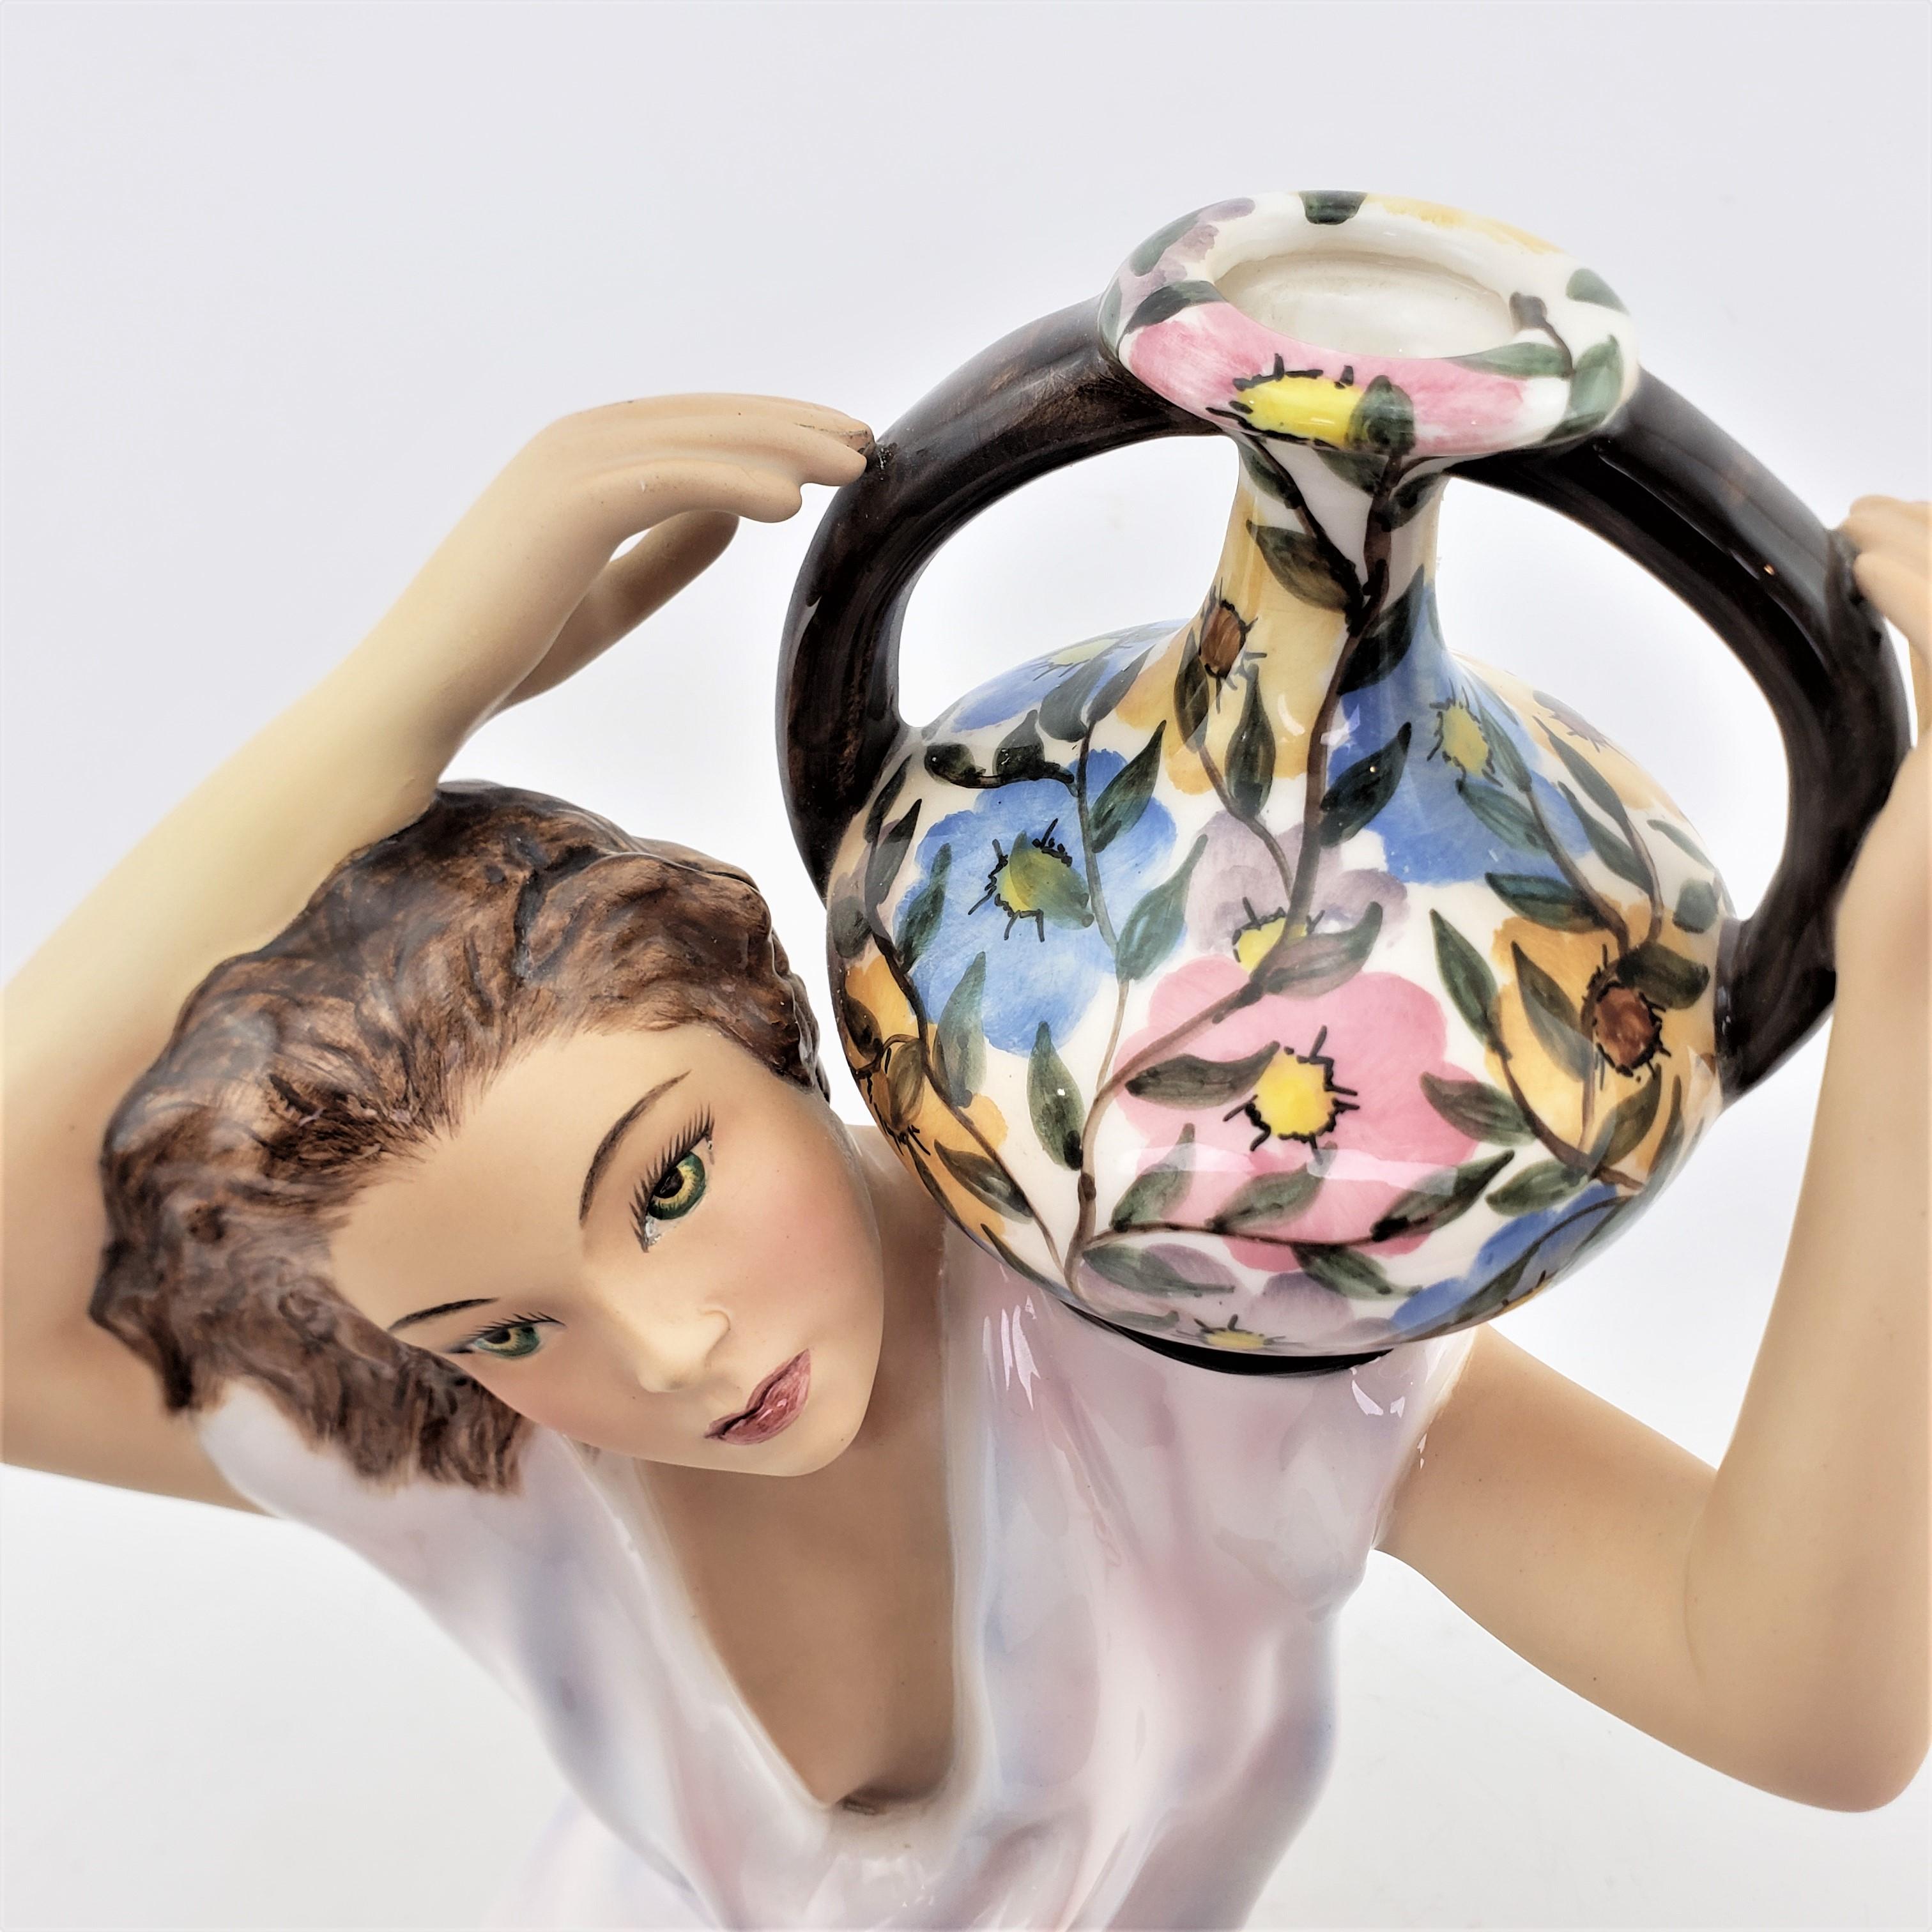 Le Bertetti Large Mid-Century Modern Torino Italy Ceramic Female Sculpture  For Sale 3